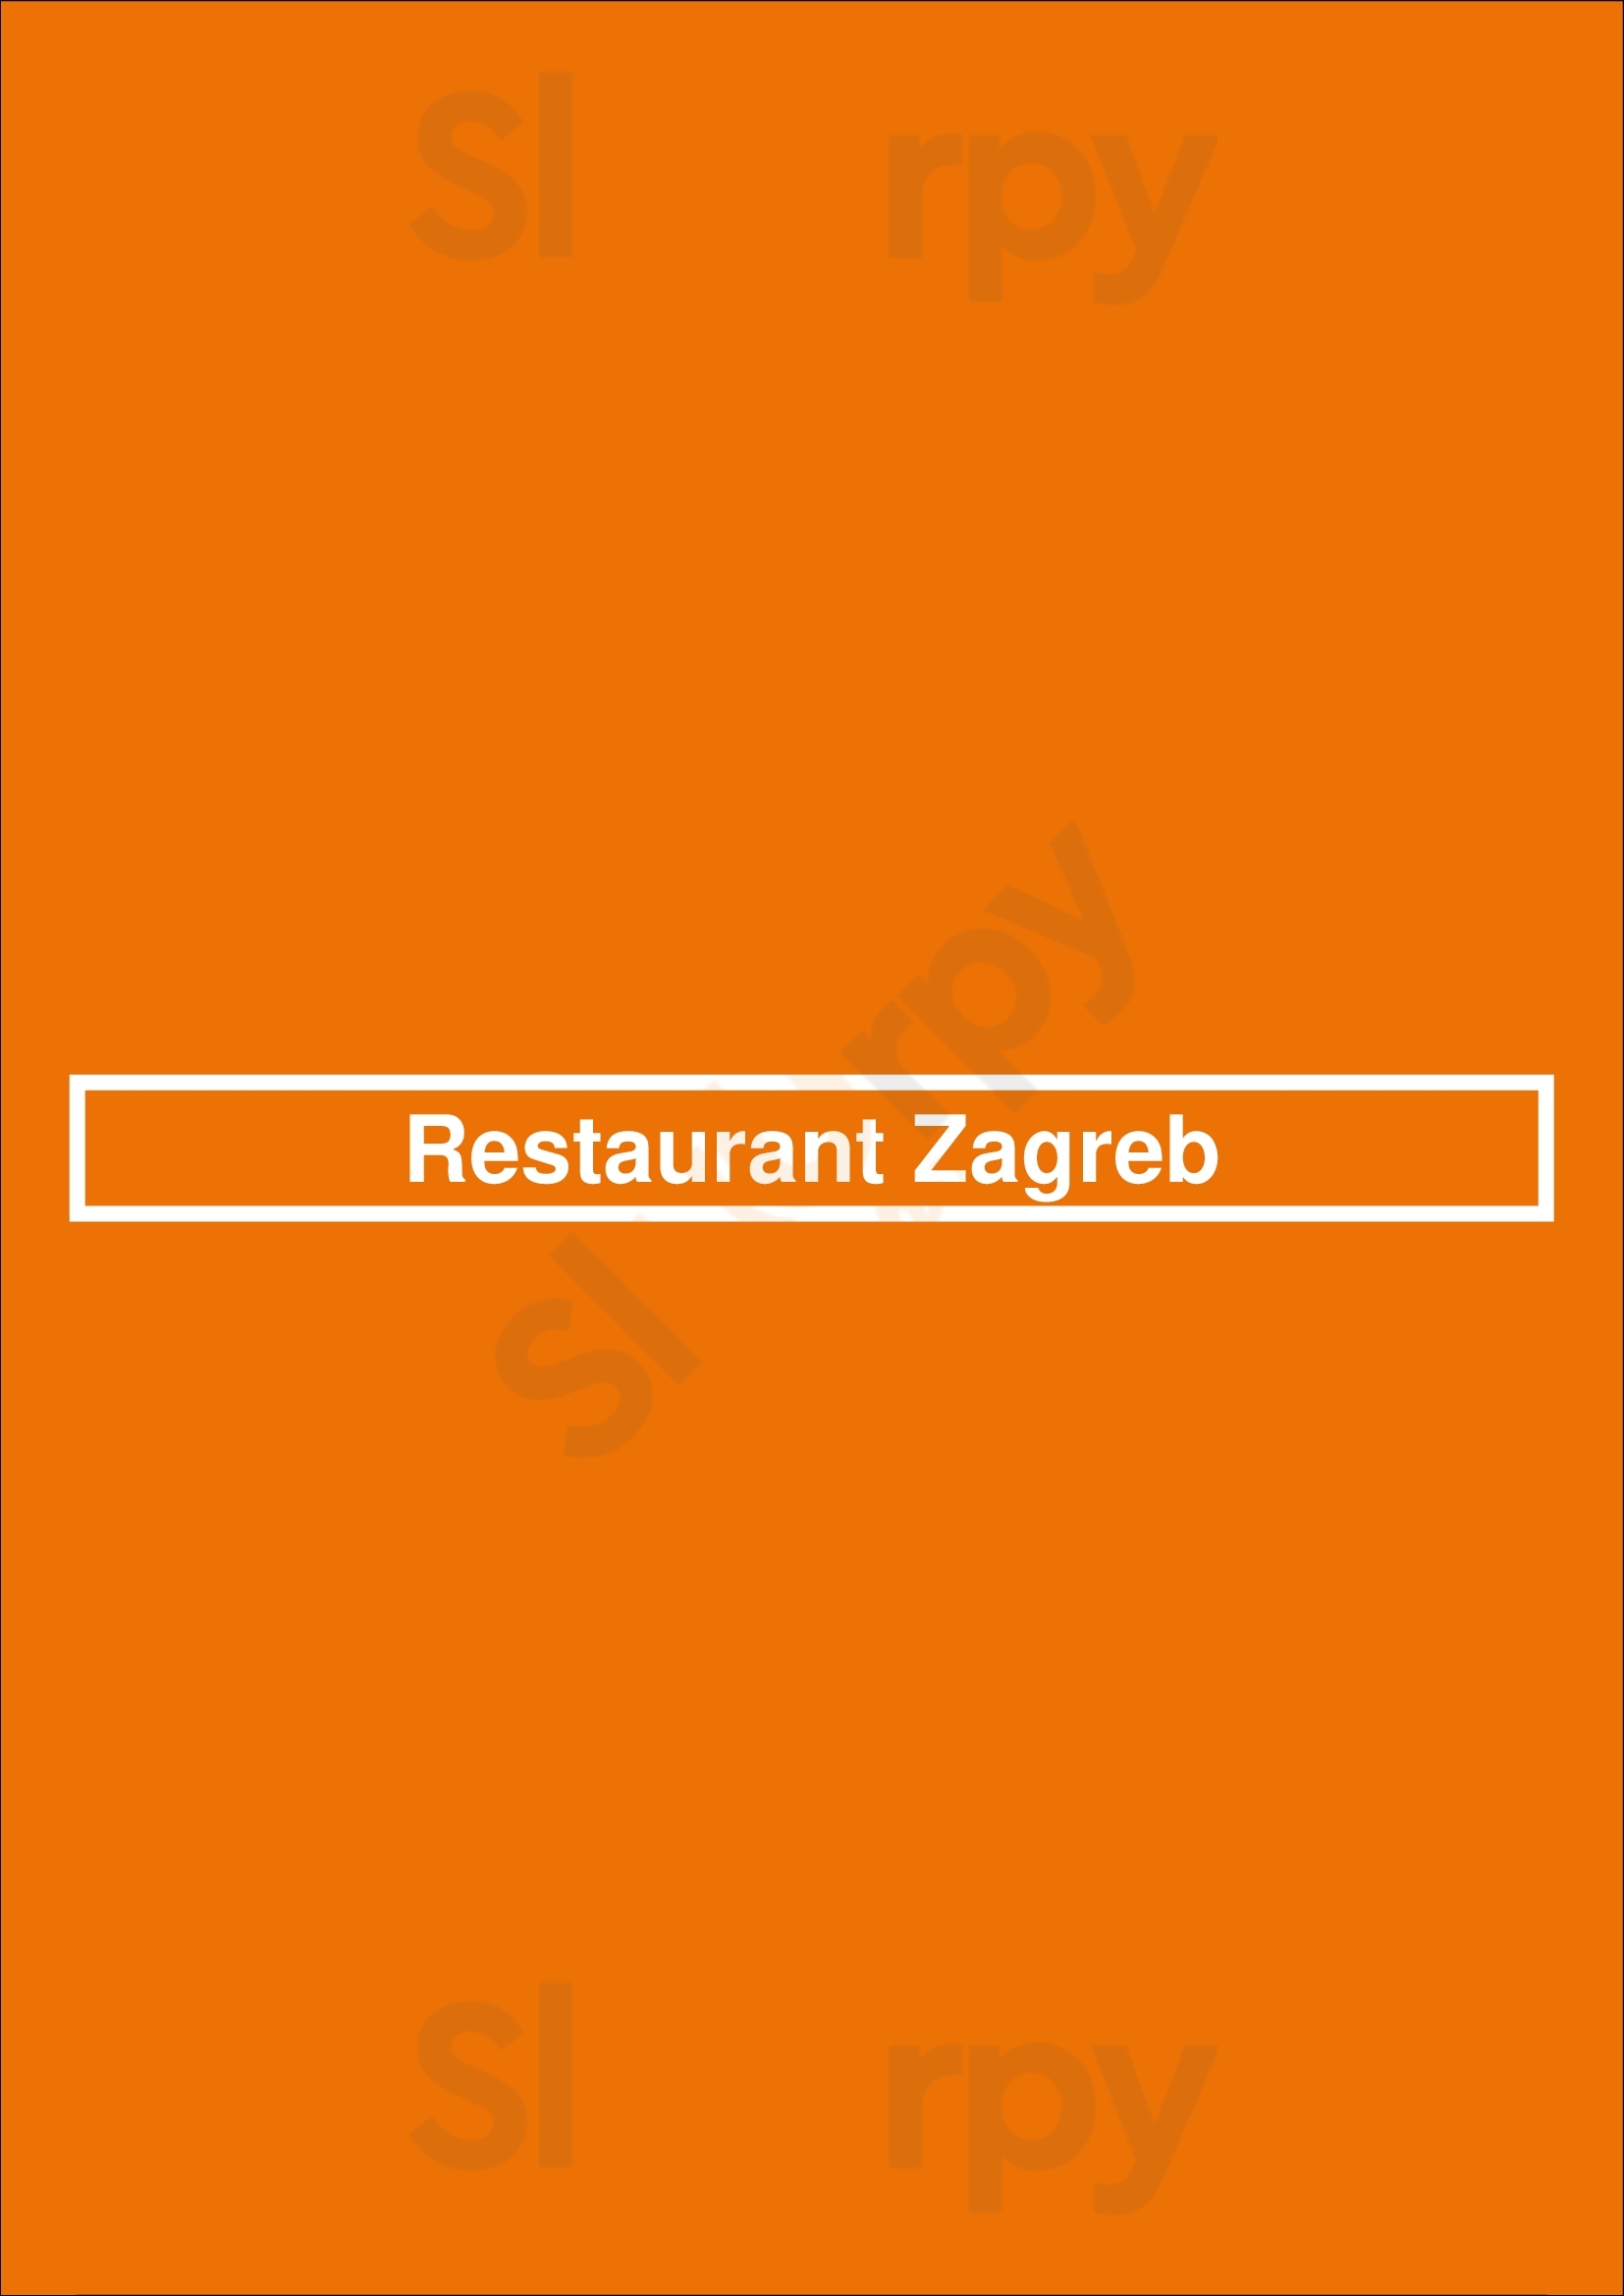 Restaurant Zagreb Anvers Menu - 1